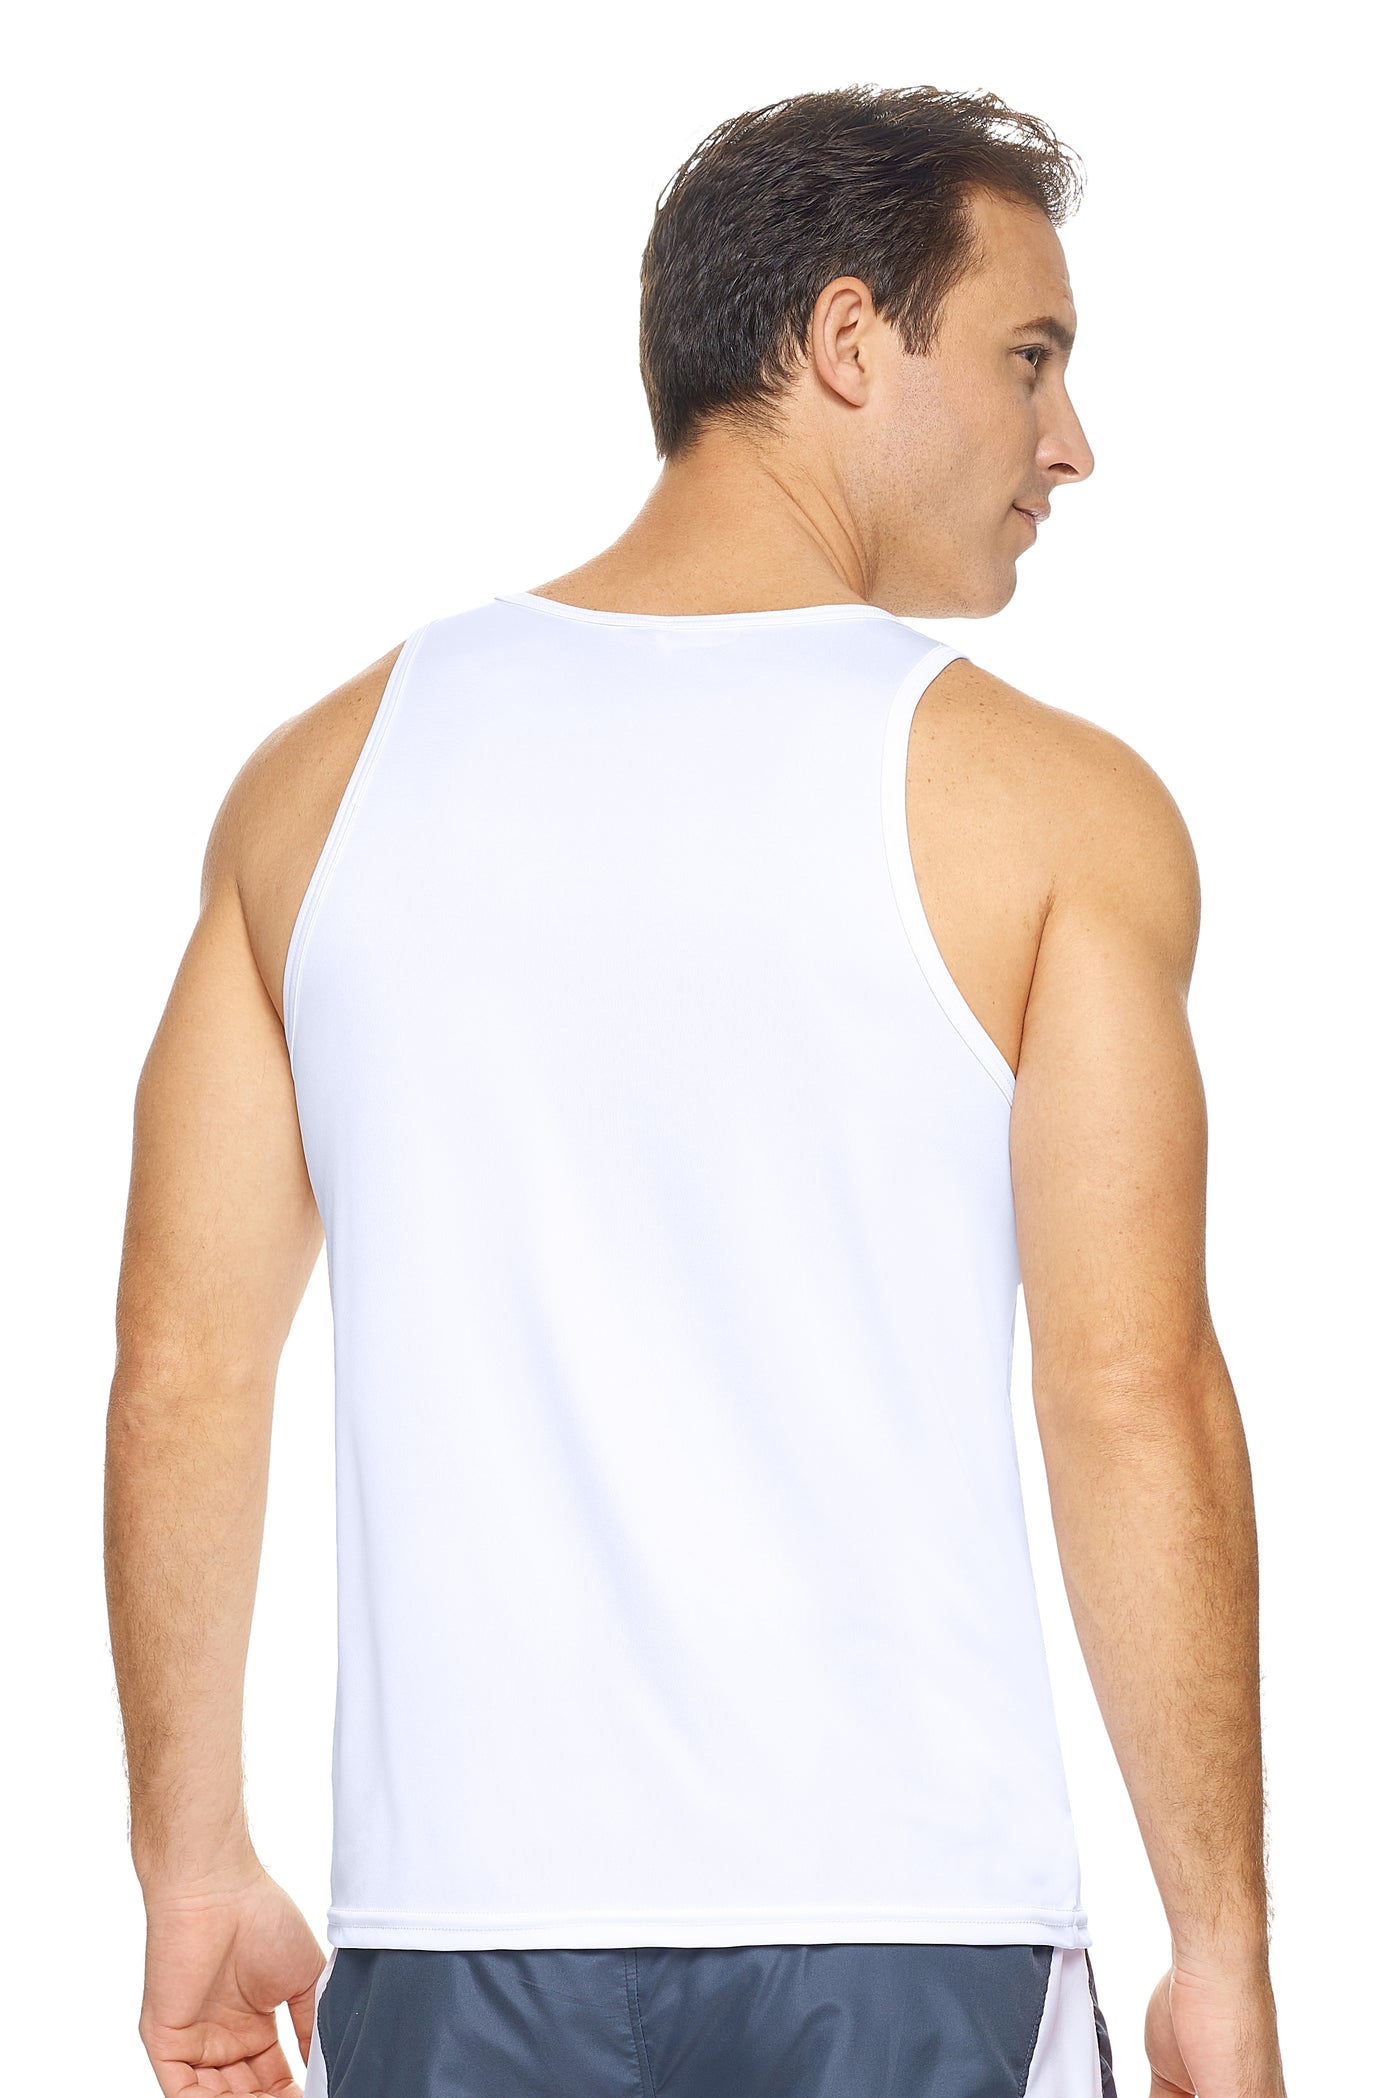 Expert Brand Retail Eco-Friendly Activewear Sportswear Men's pk MaX™ Endurance Sleeveless Tank Made in USA white 3#color_white